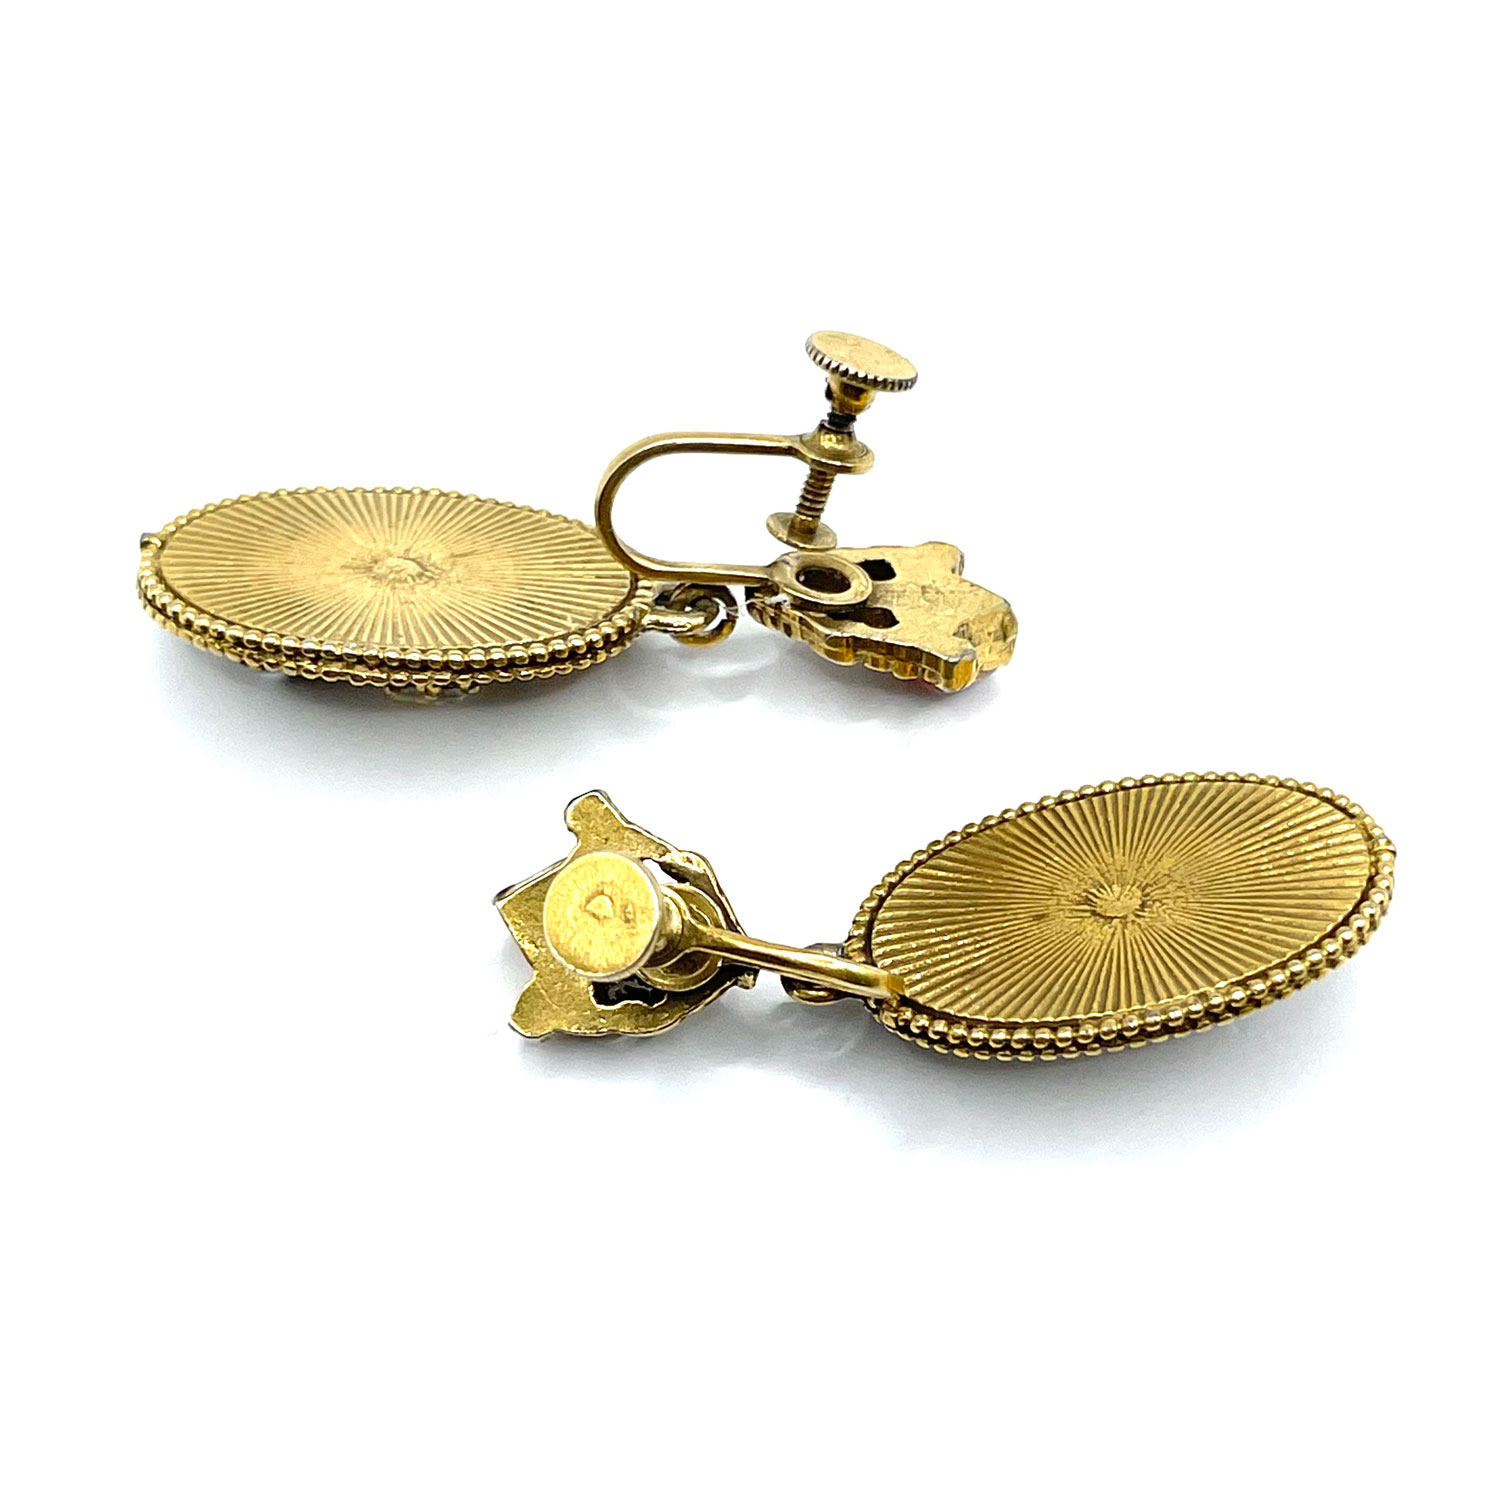 Victorian revival rhinestone drop earrings